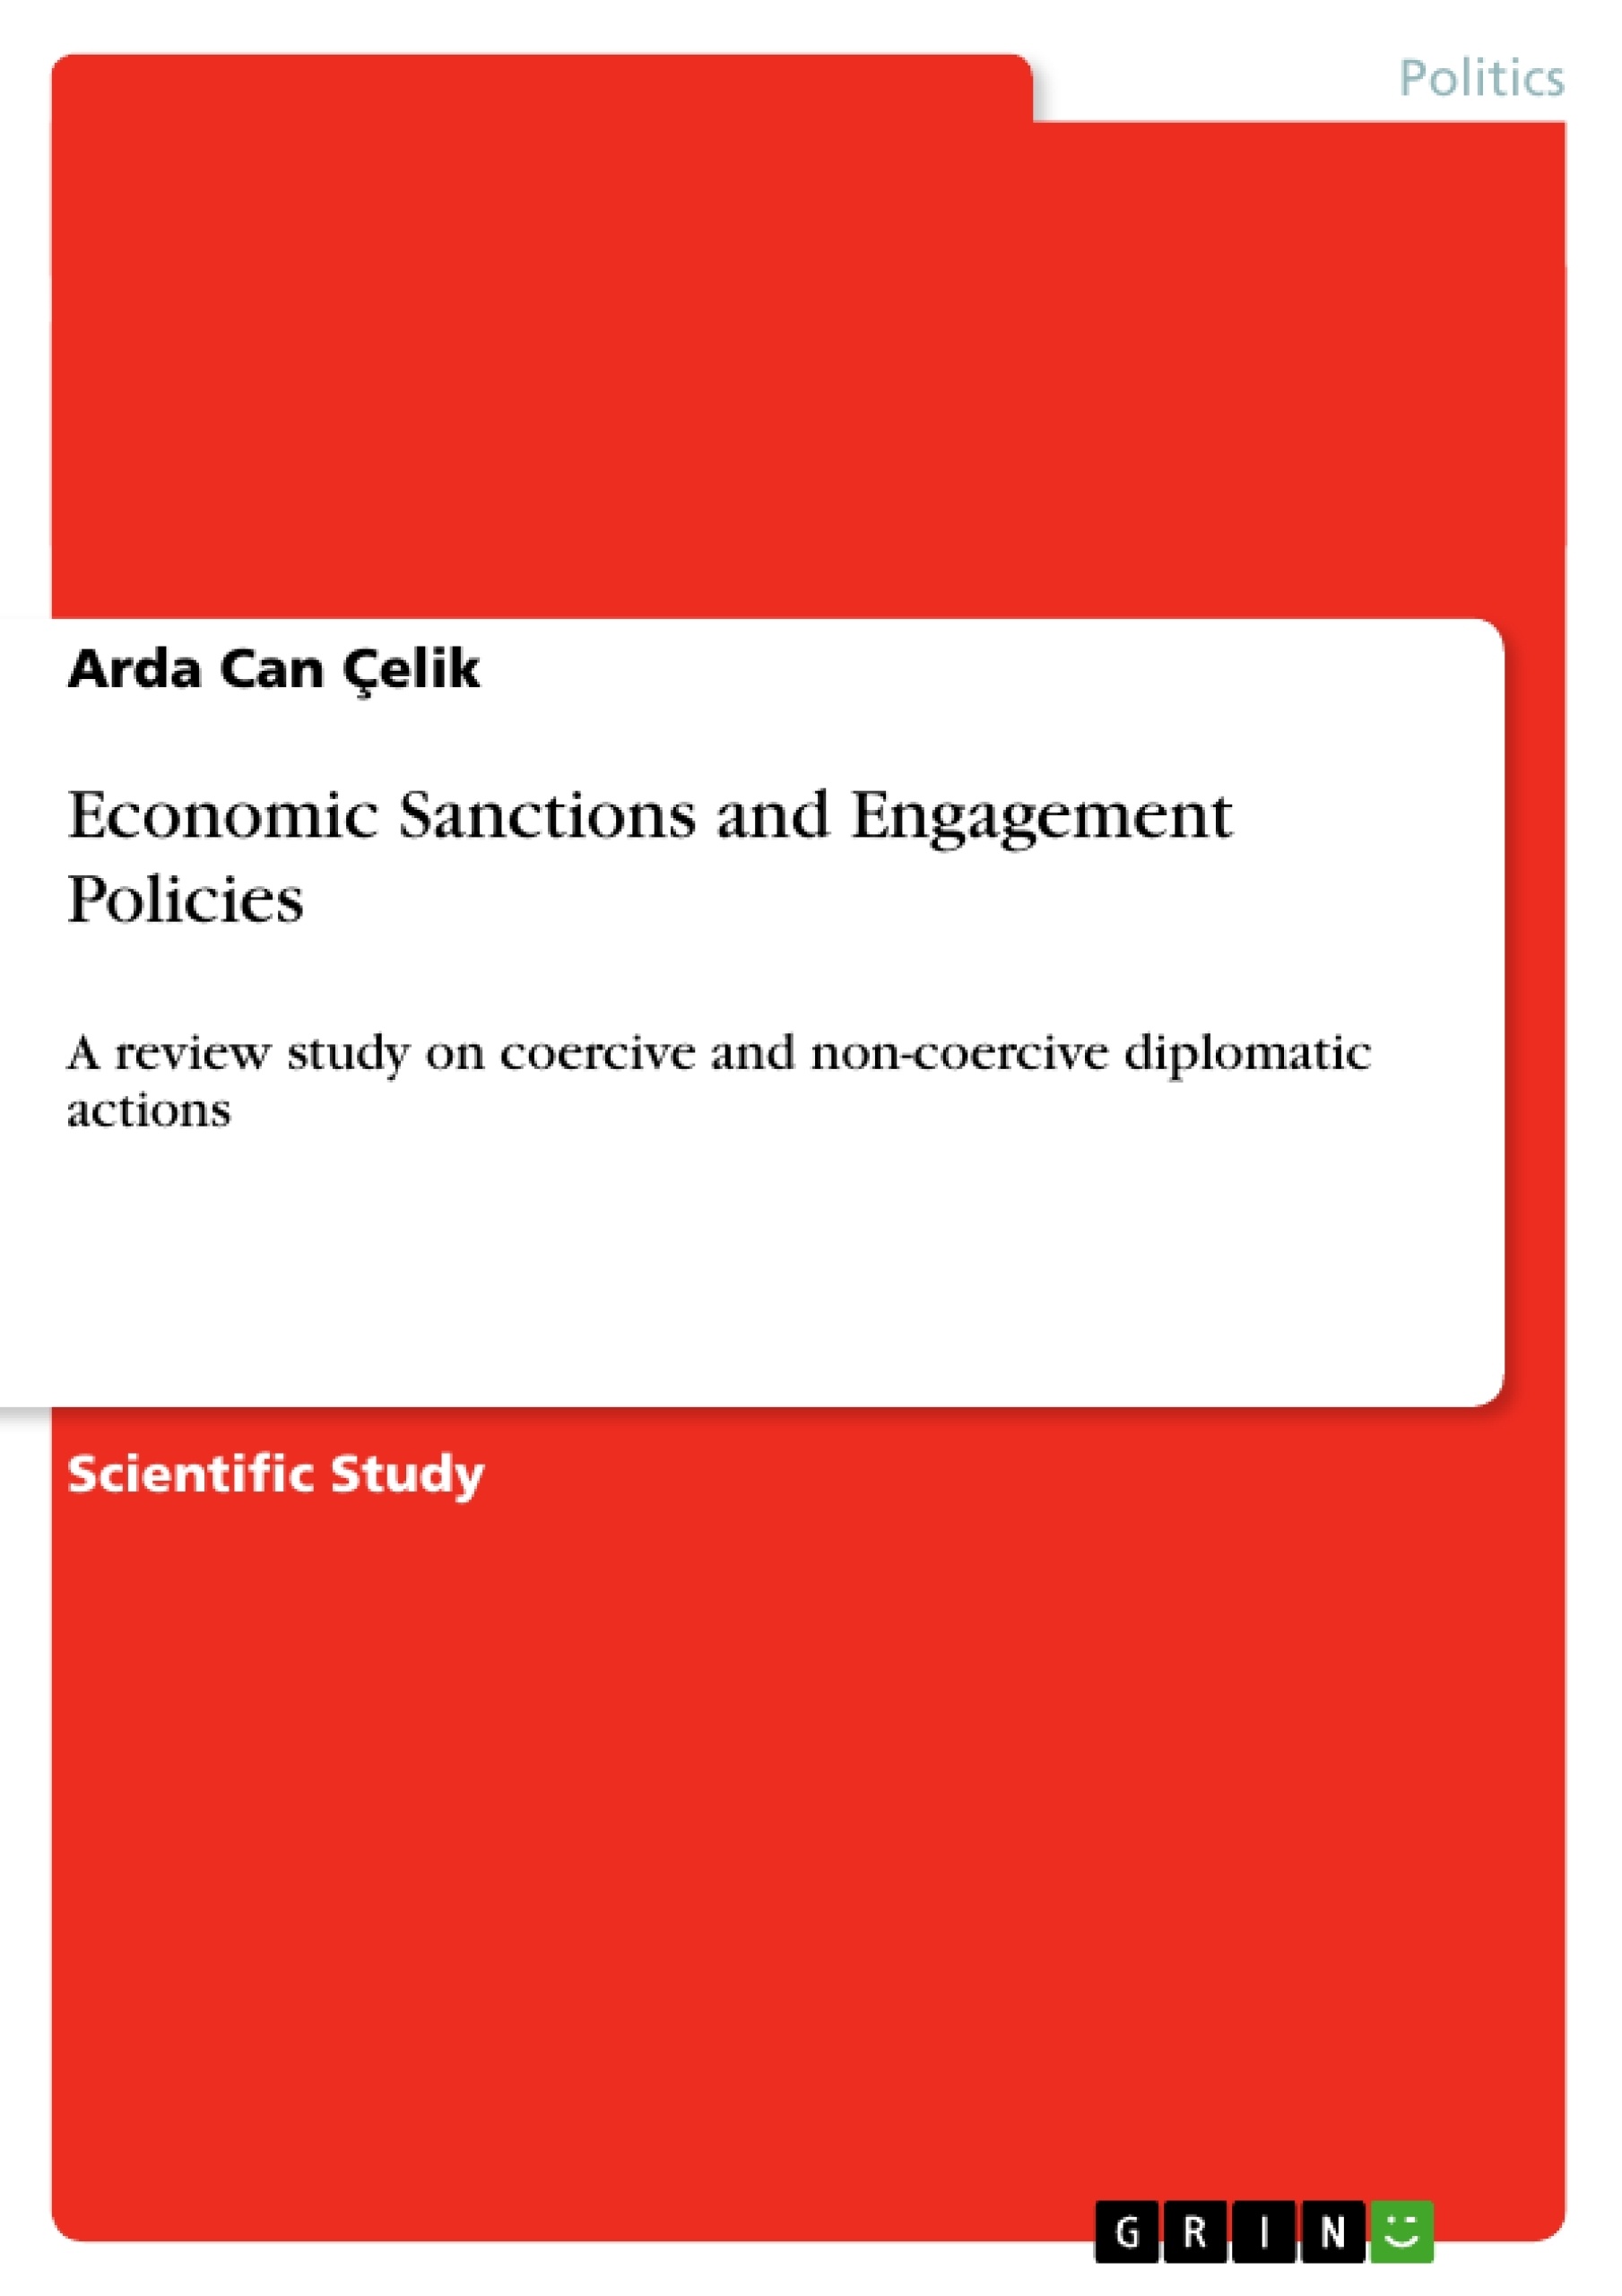 Title: Economic Sanctions and Engagement Policies